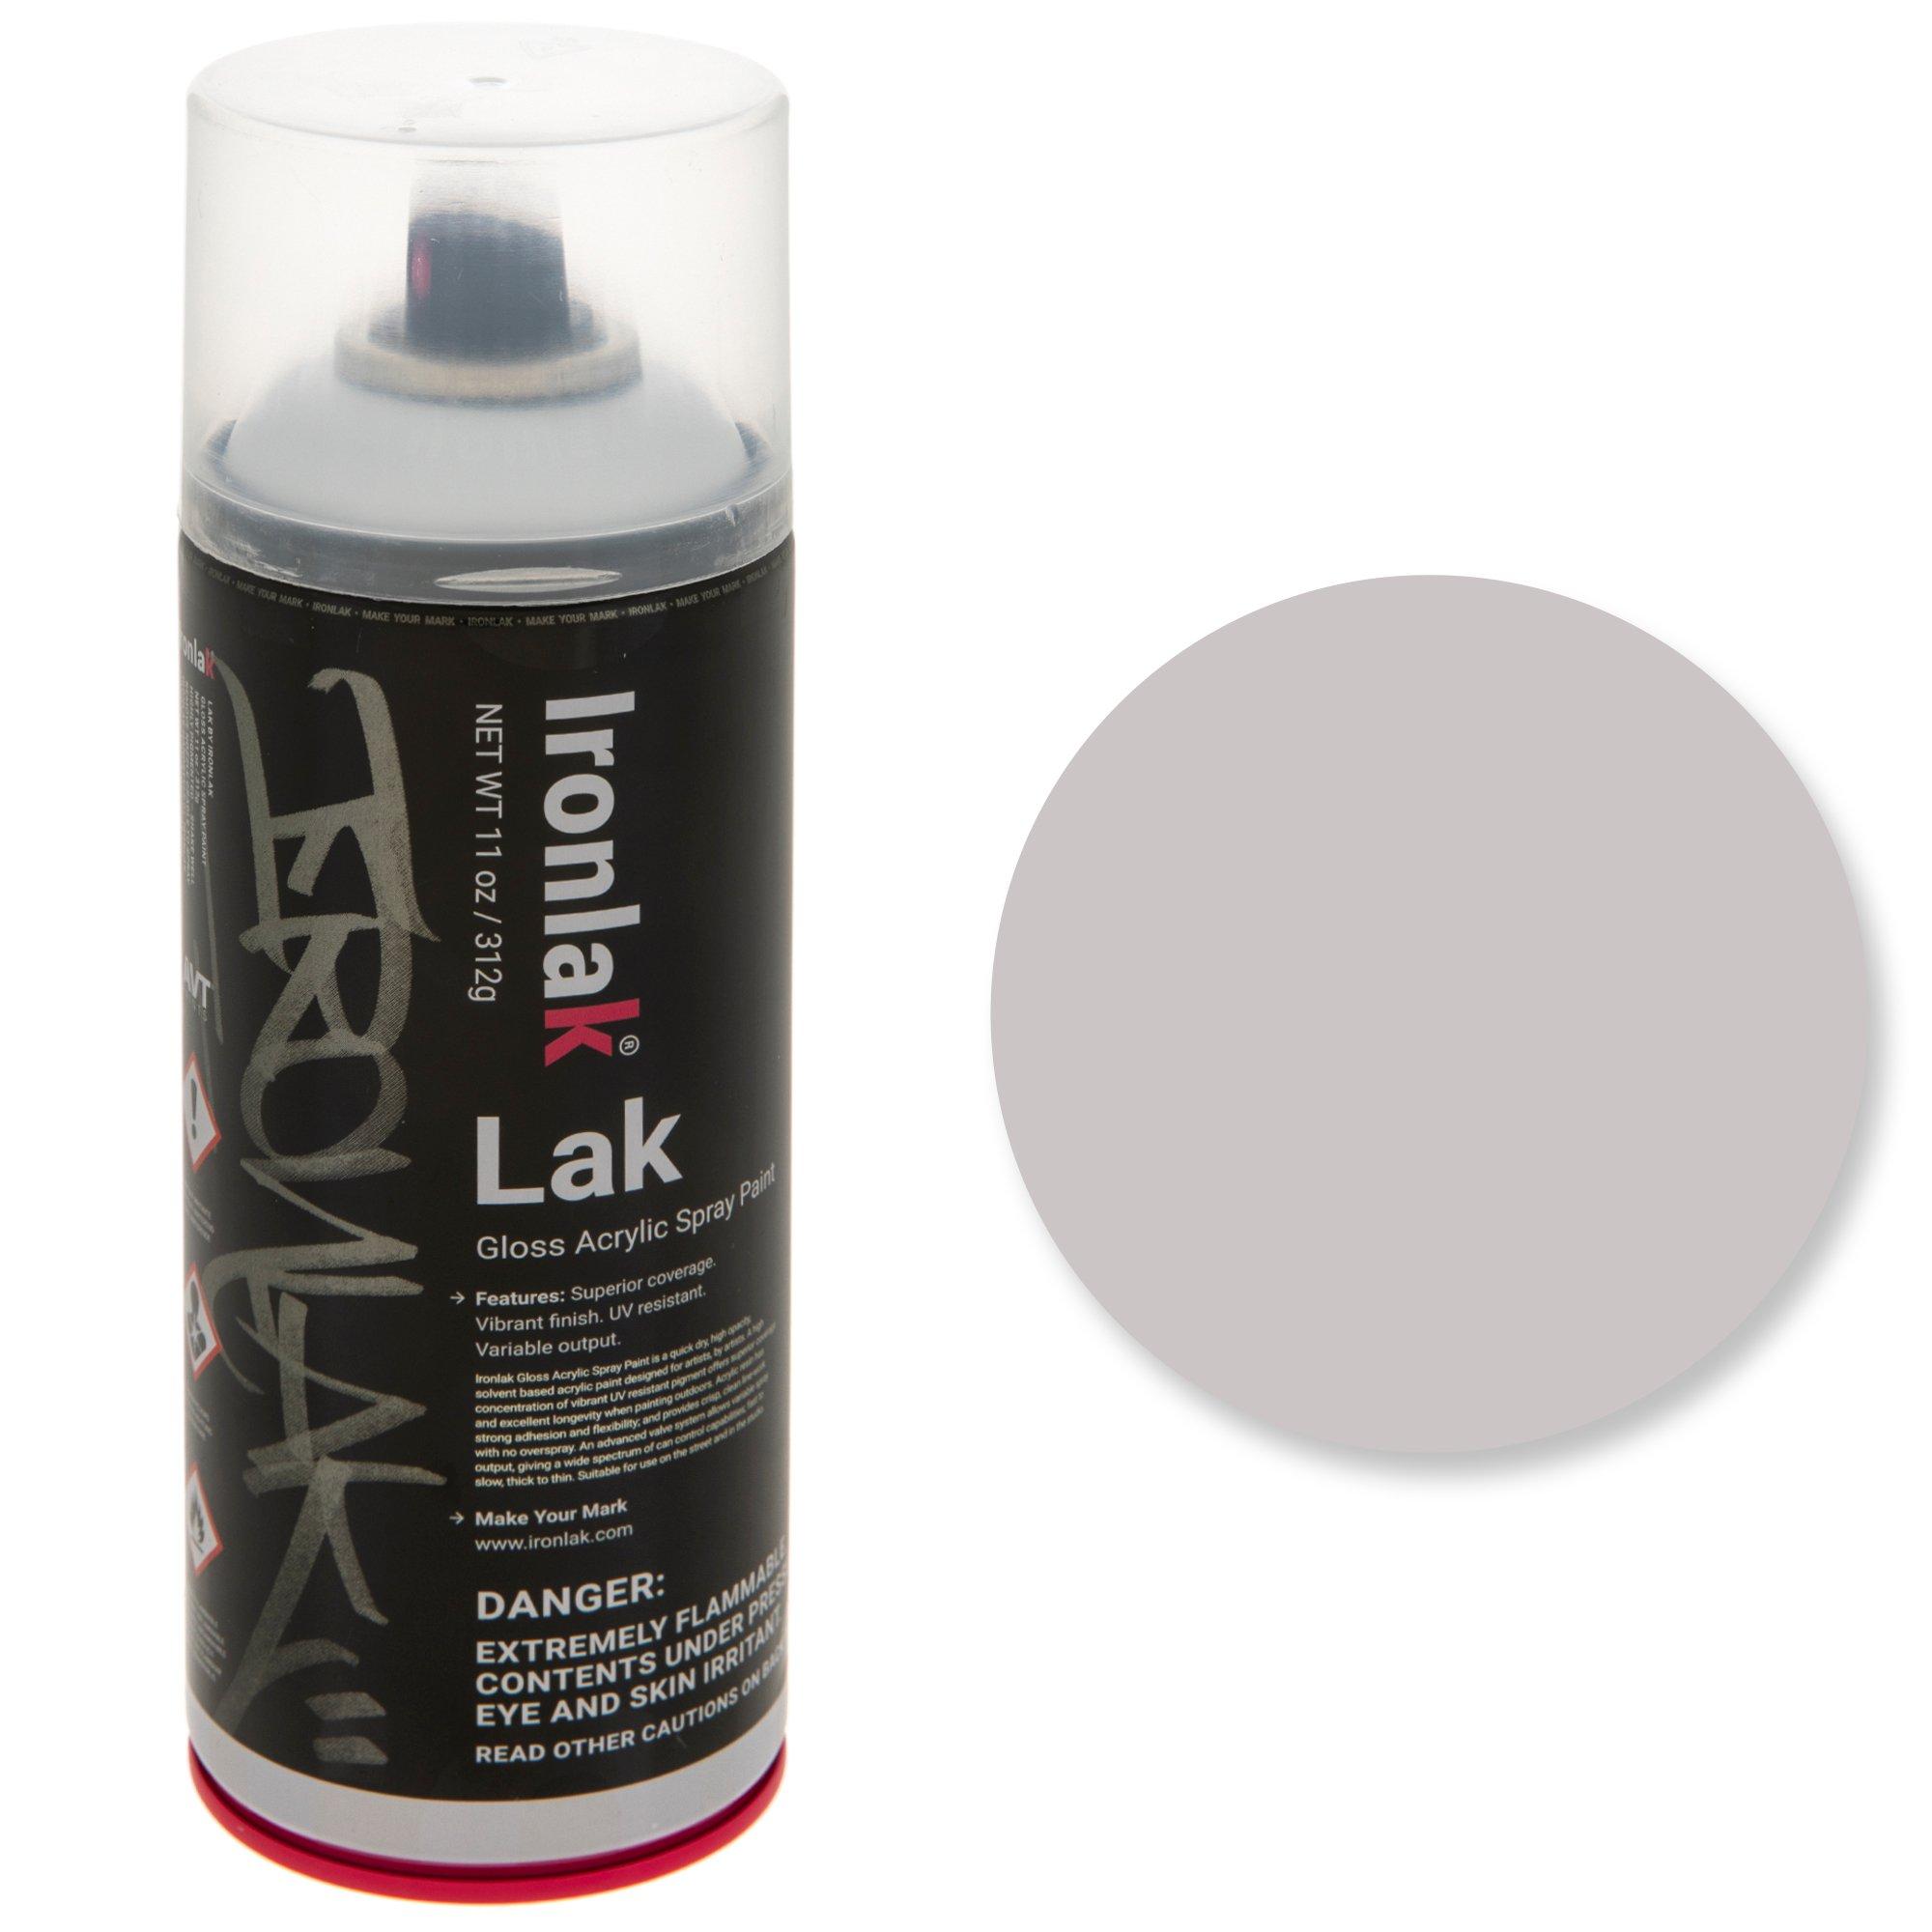 Ironlak Spray Paint, 400ml, Matte Black